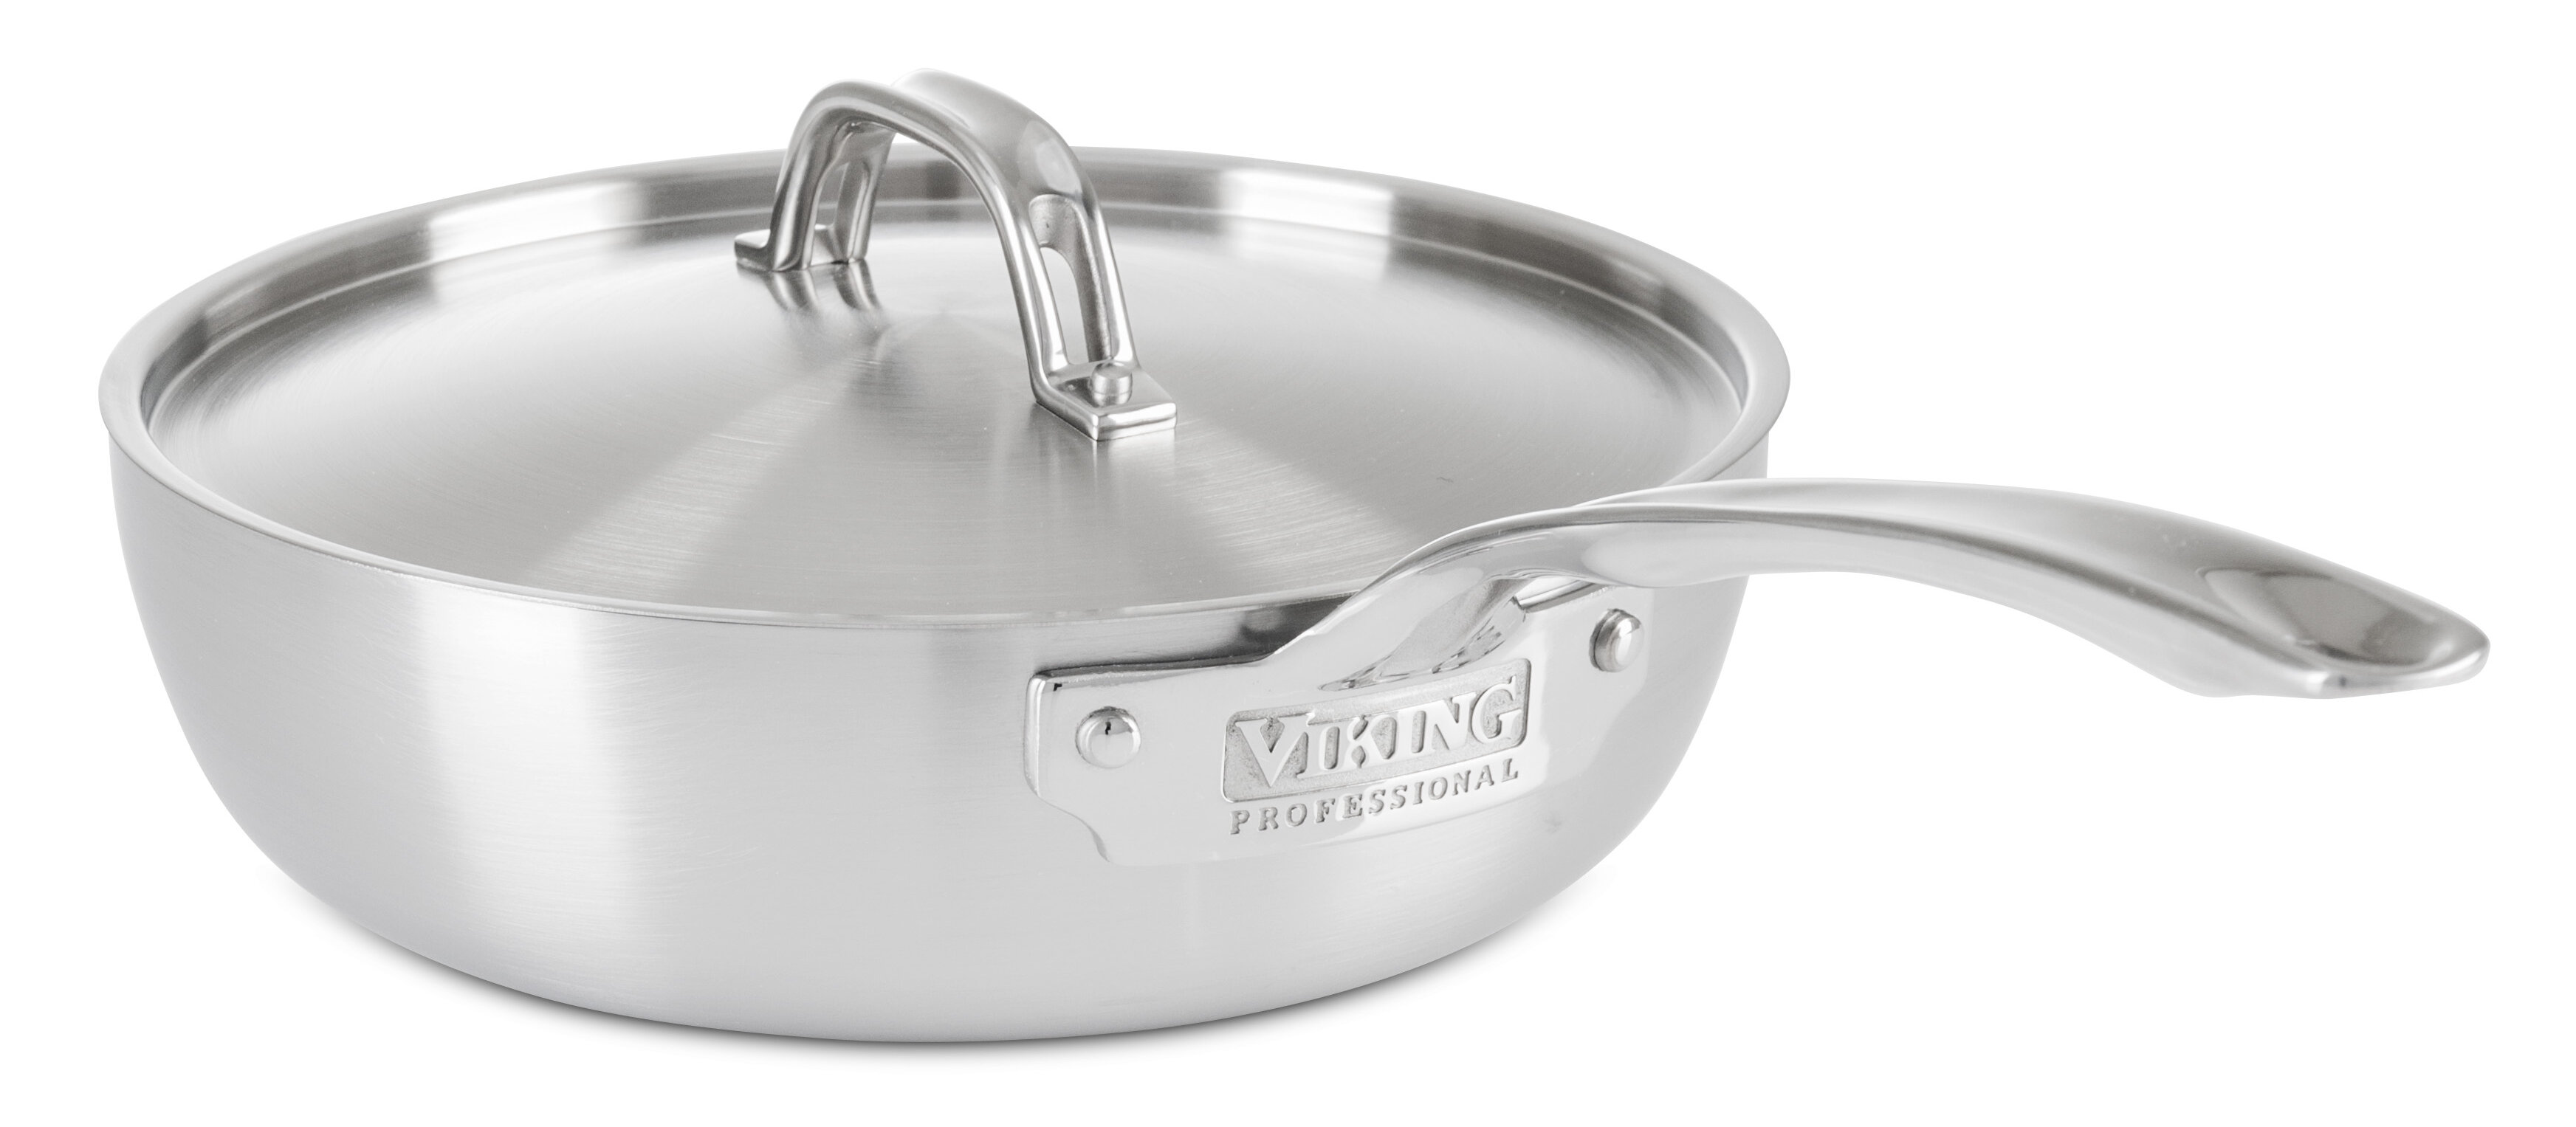 Viking Professional 5-Ply Stainless Steel 6-Quart Stock Pot